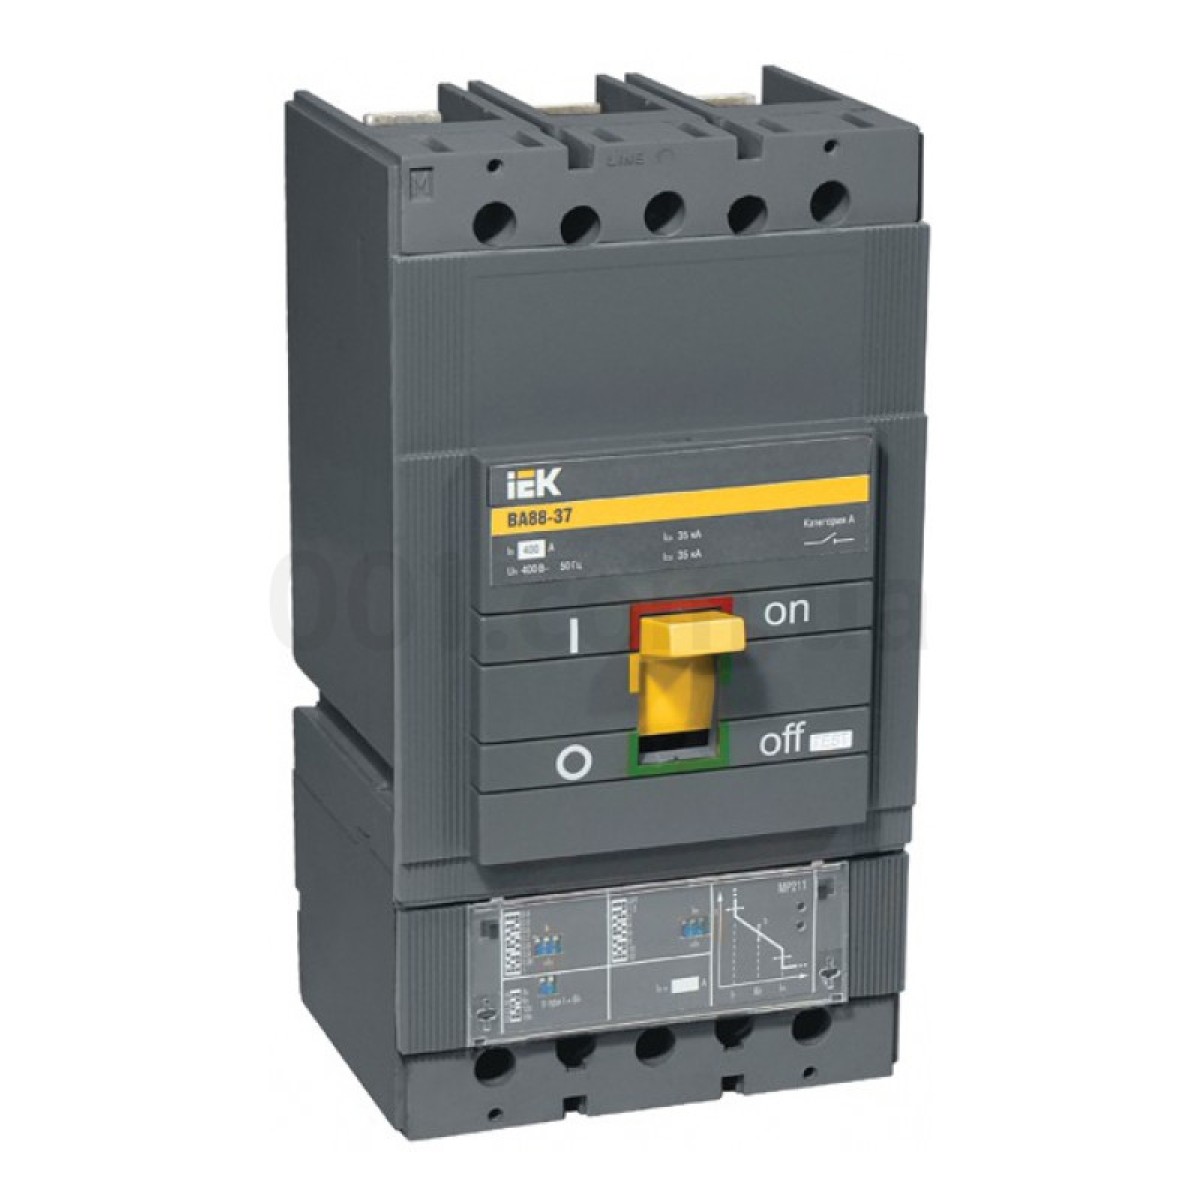 Автоматический выключатель ВА88-37 3P 400А 35кА с электронным расцепителем MP211, IEK 256_256.jpg